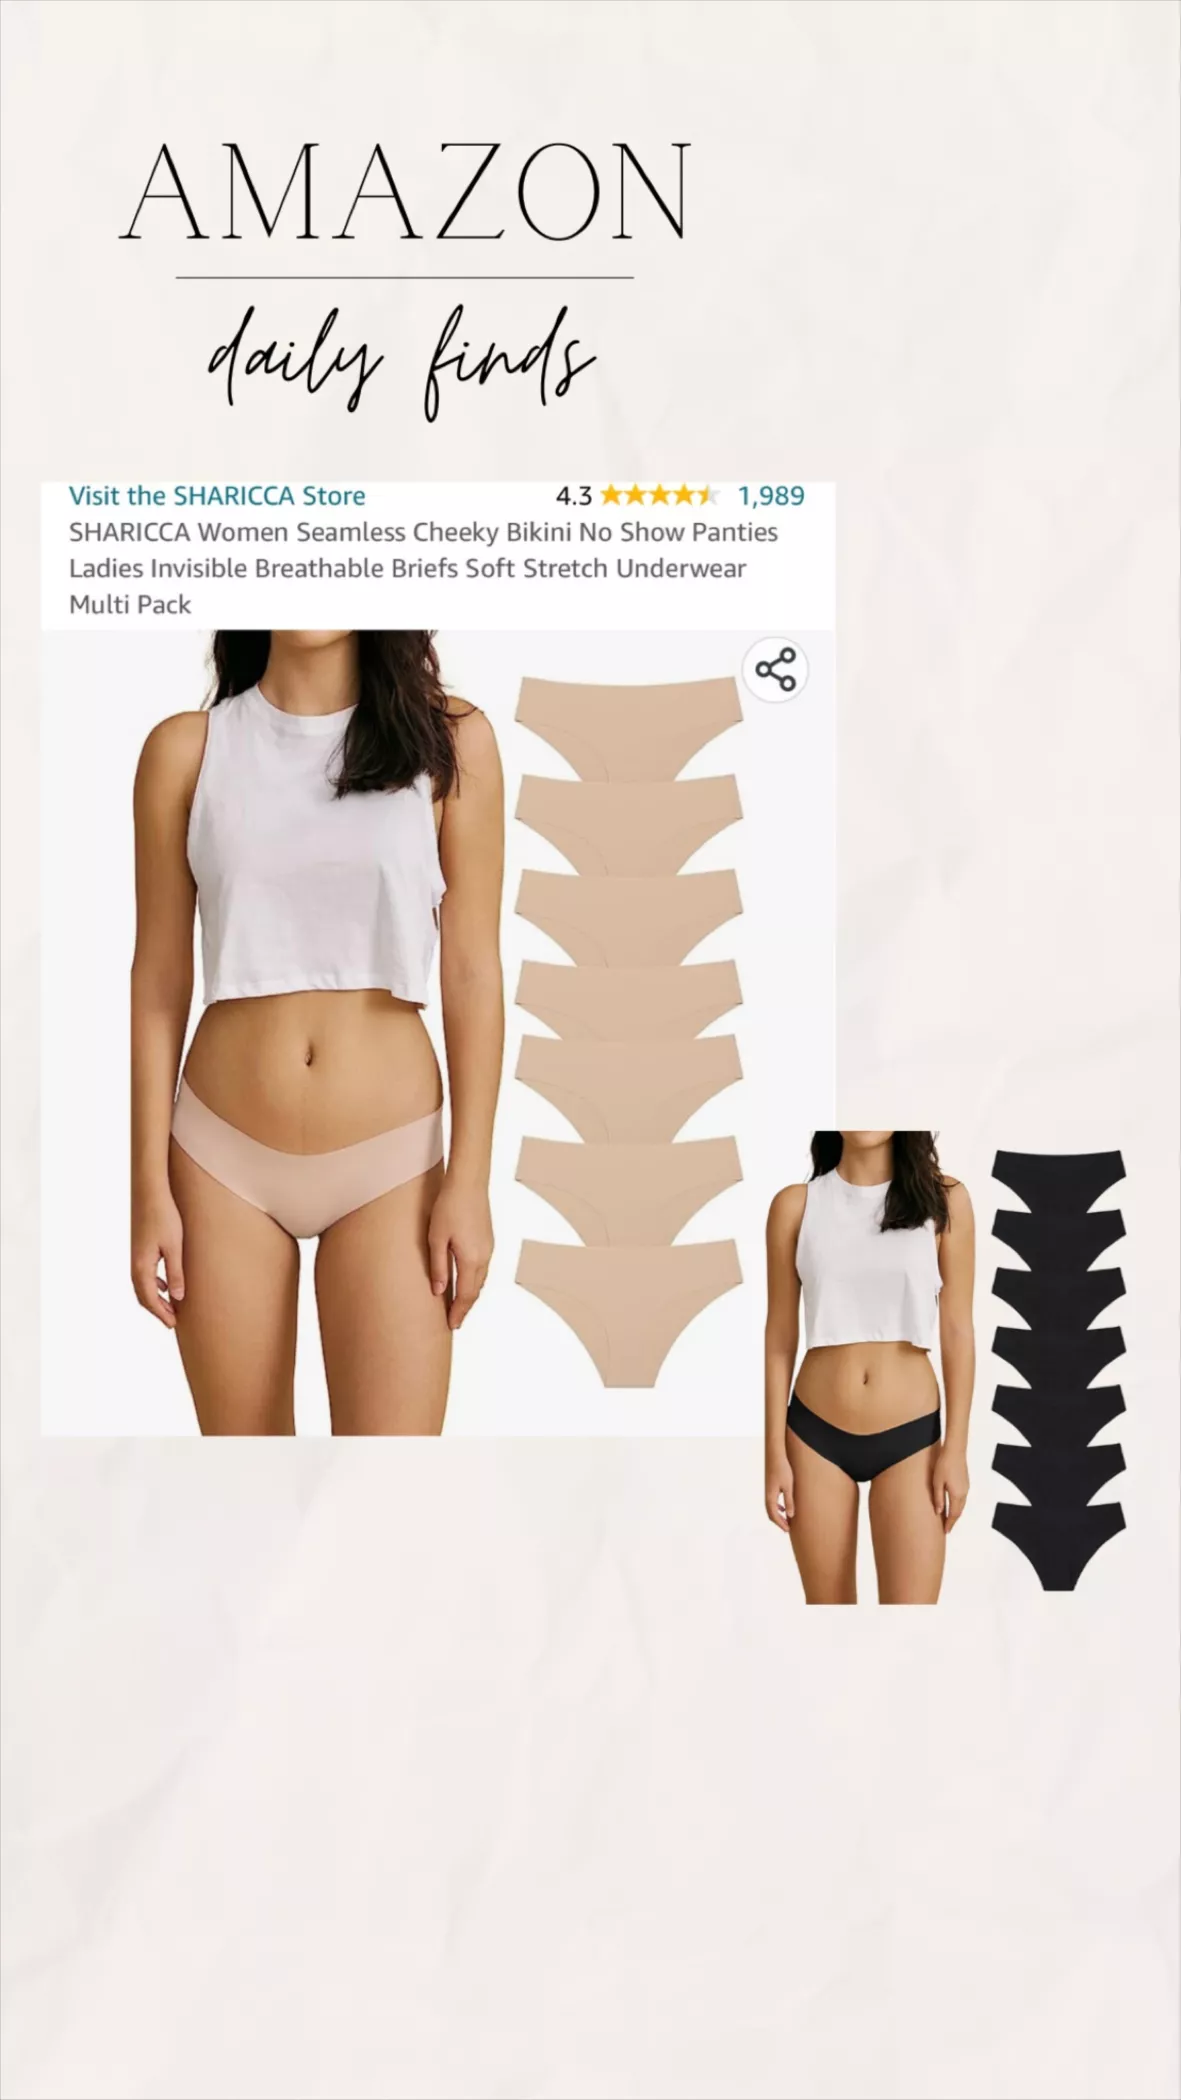 SHARICCA Seamless Cheeky Bikini Invisible Breathable Soft Stretchy